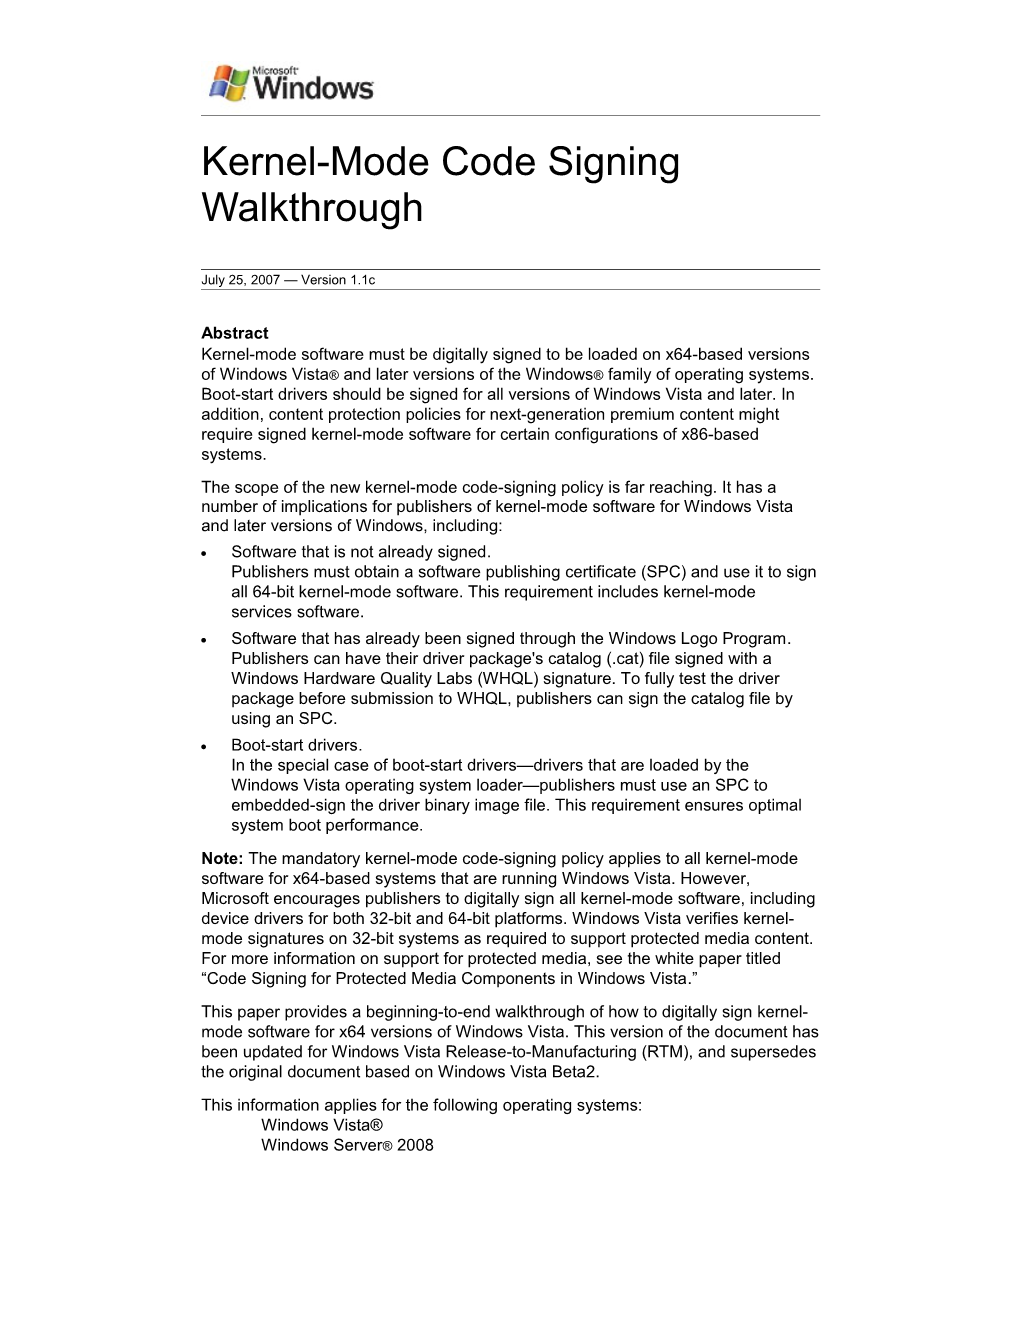 Kernel-Mode Code Signing Walkthrough